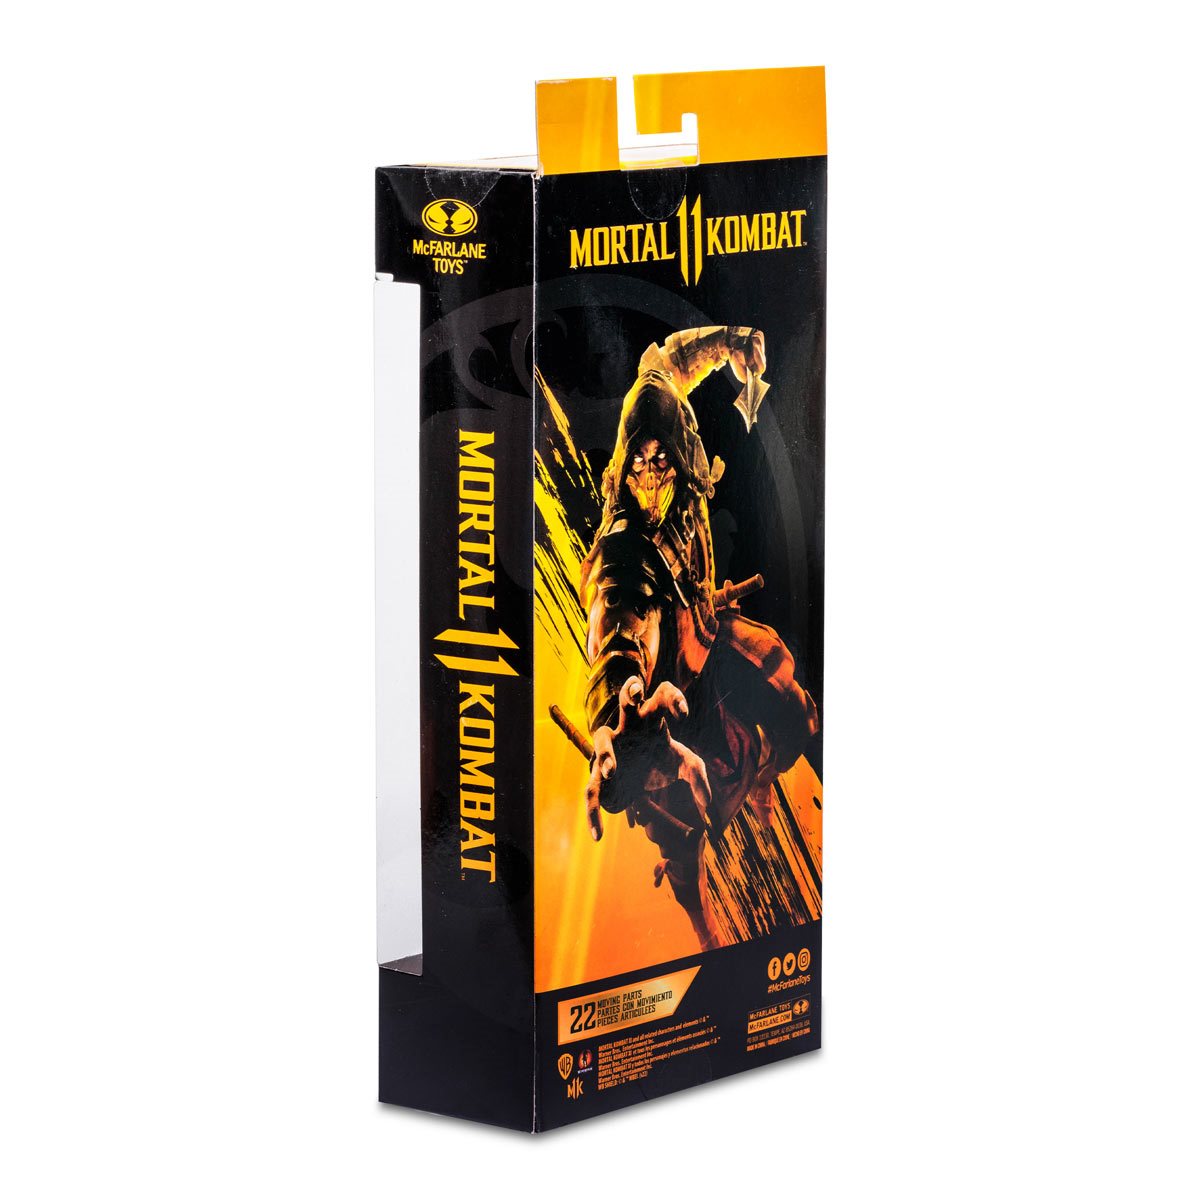 Mortal Kombat - Commando Spawn 7-Inch Scale Action Figure